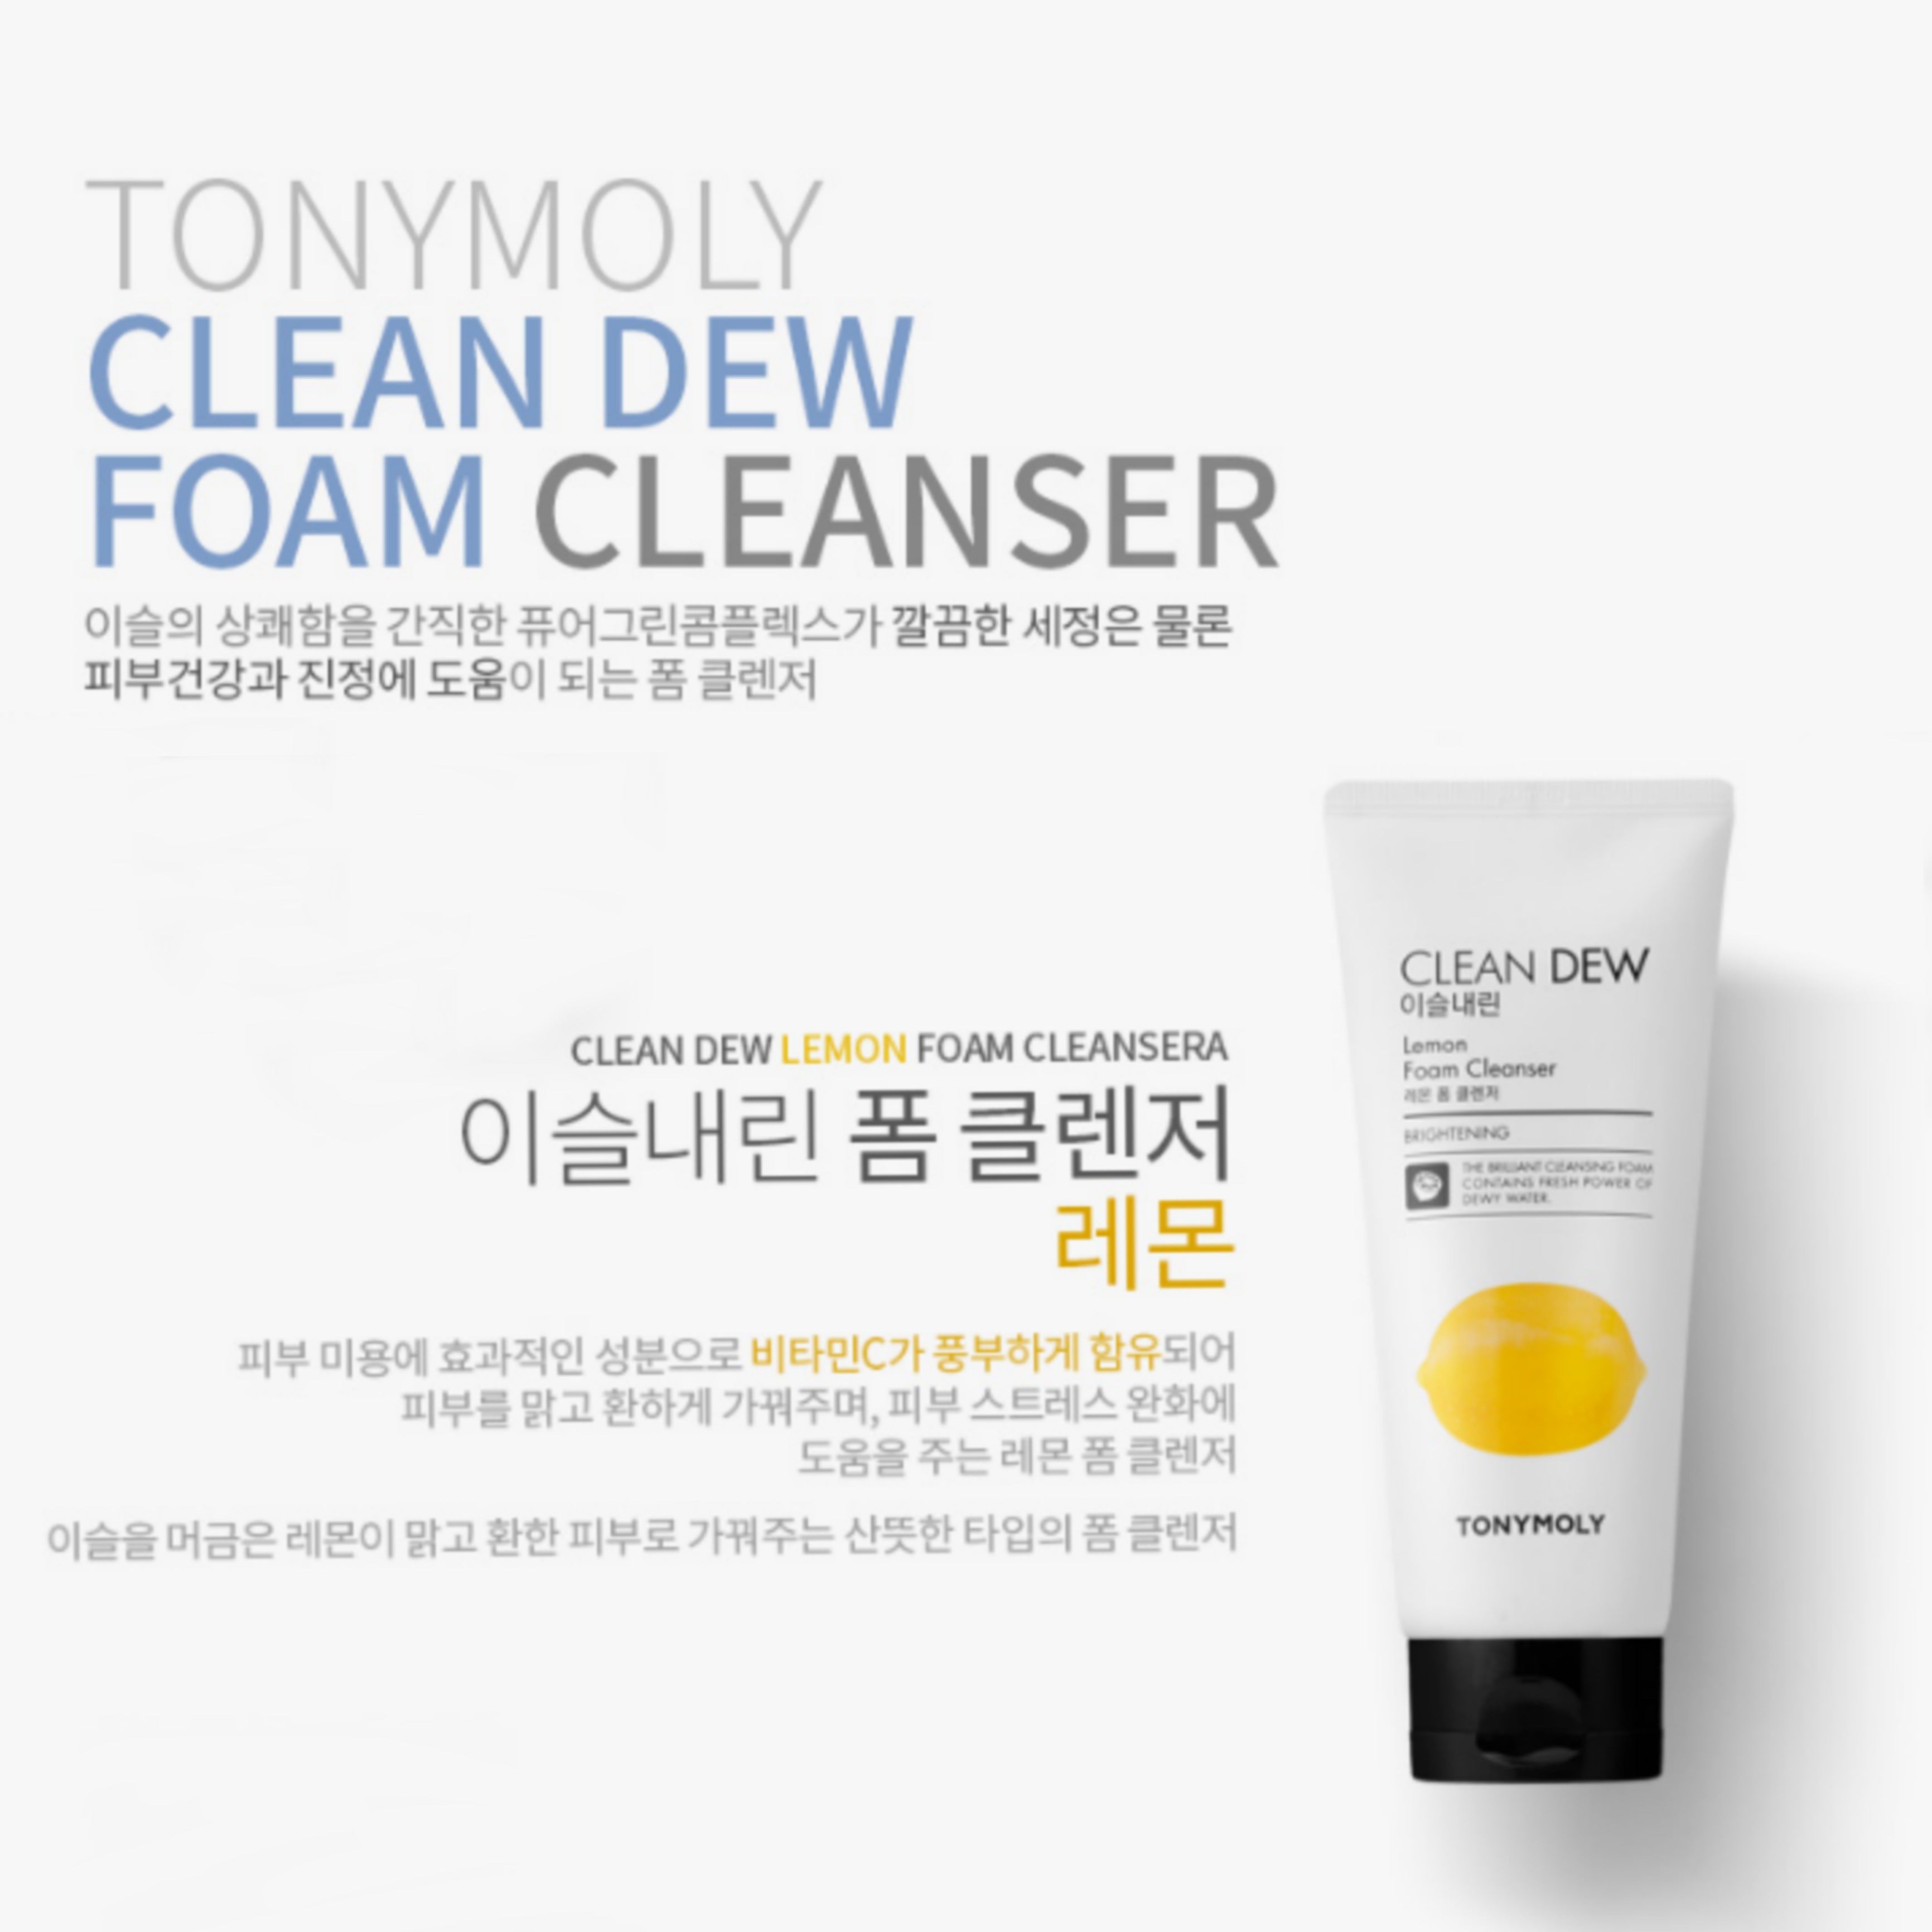 TONYMOLY Clean dew foam cleanser lemon غسول الليمون